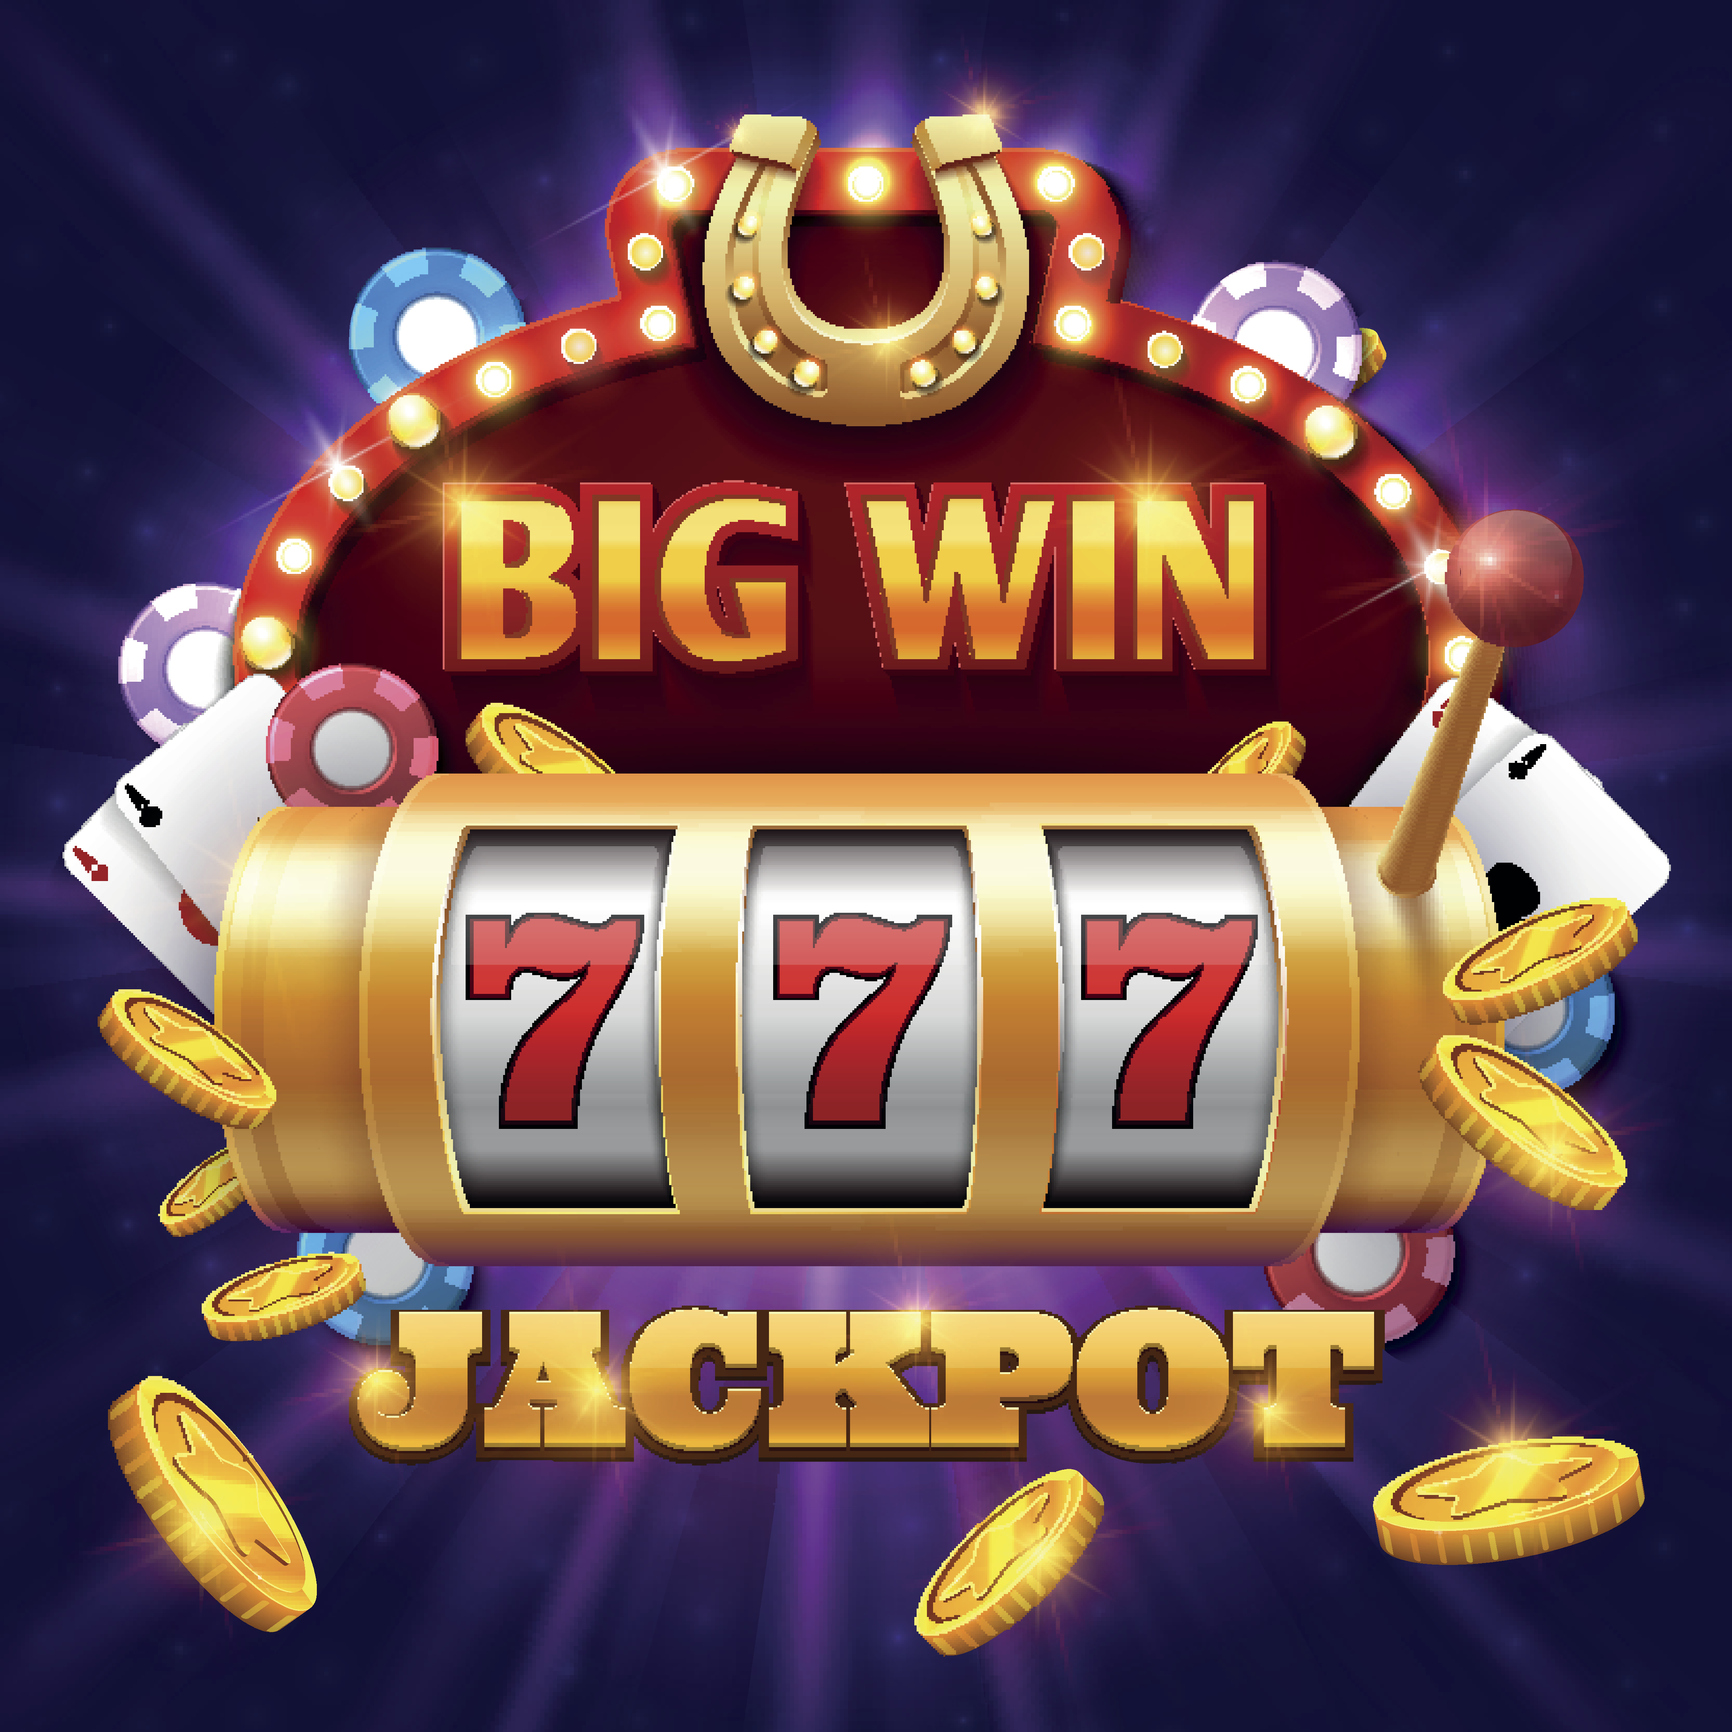 big-win-777-lottery-vector-casino-concept-with-slot-machine-825082158_1735x1735